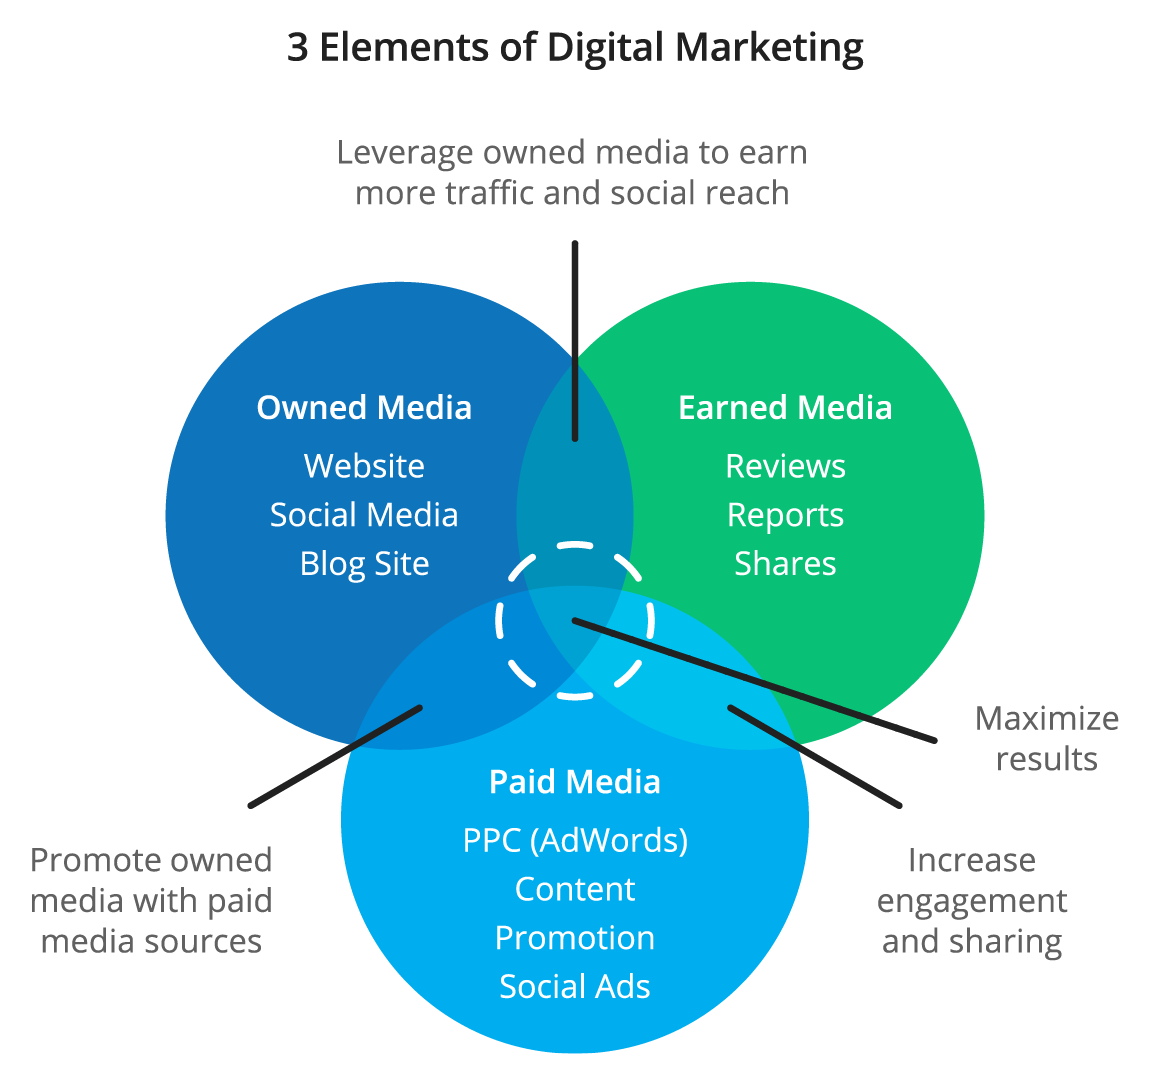 3 Elements of Digital Marketing graphic